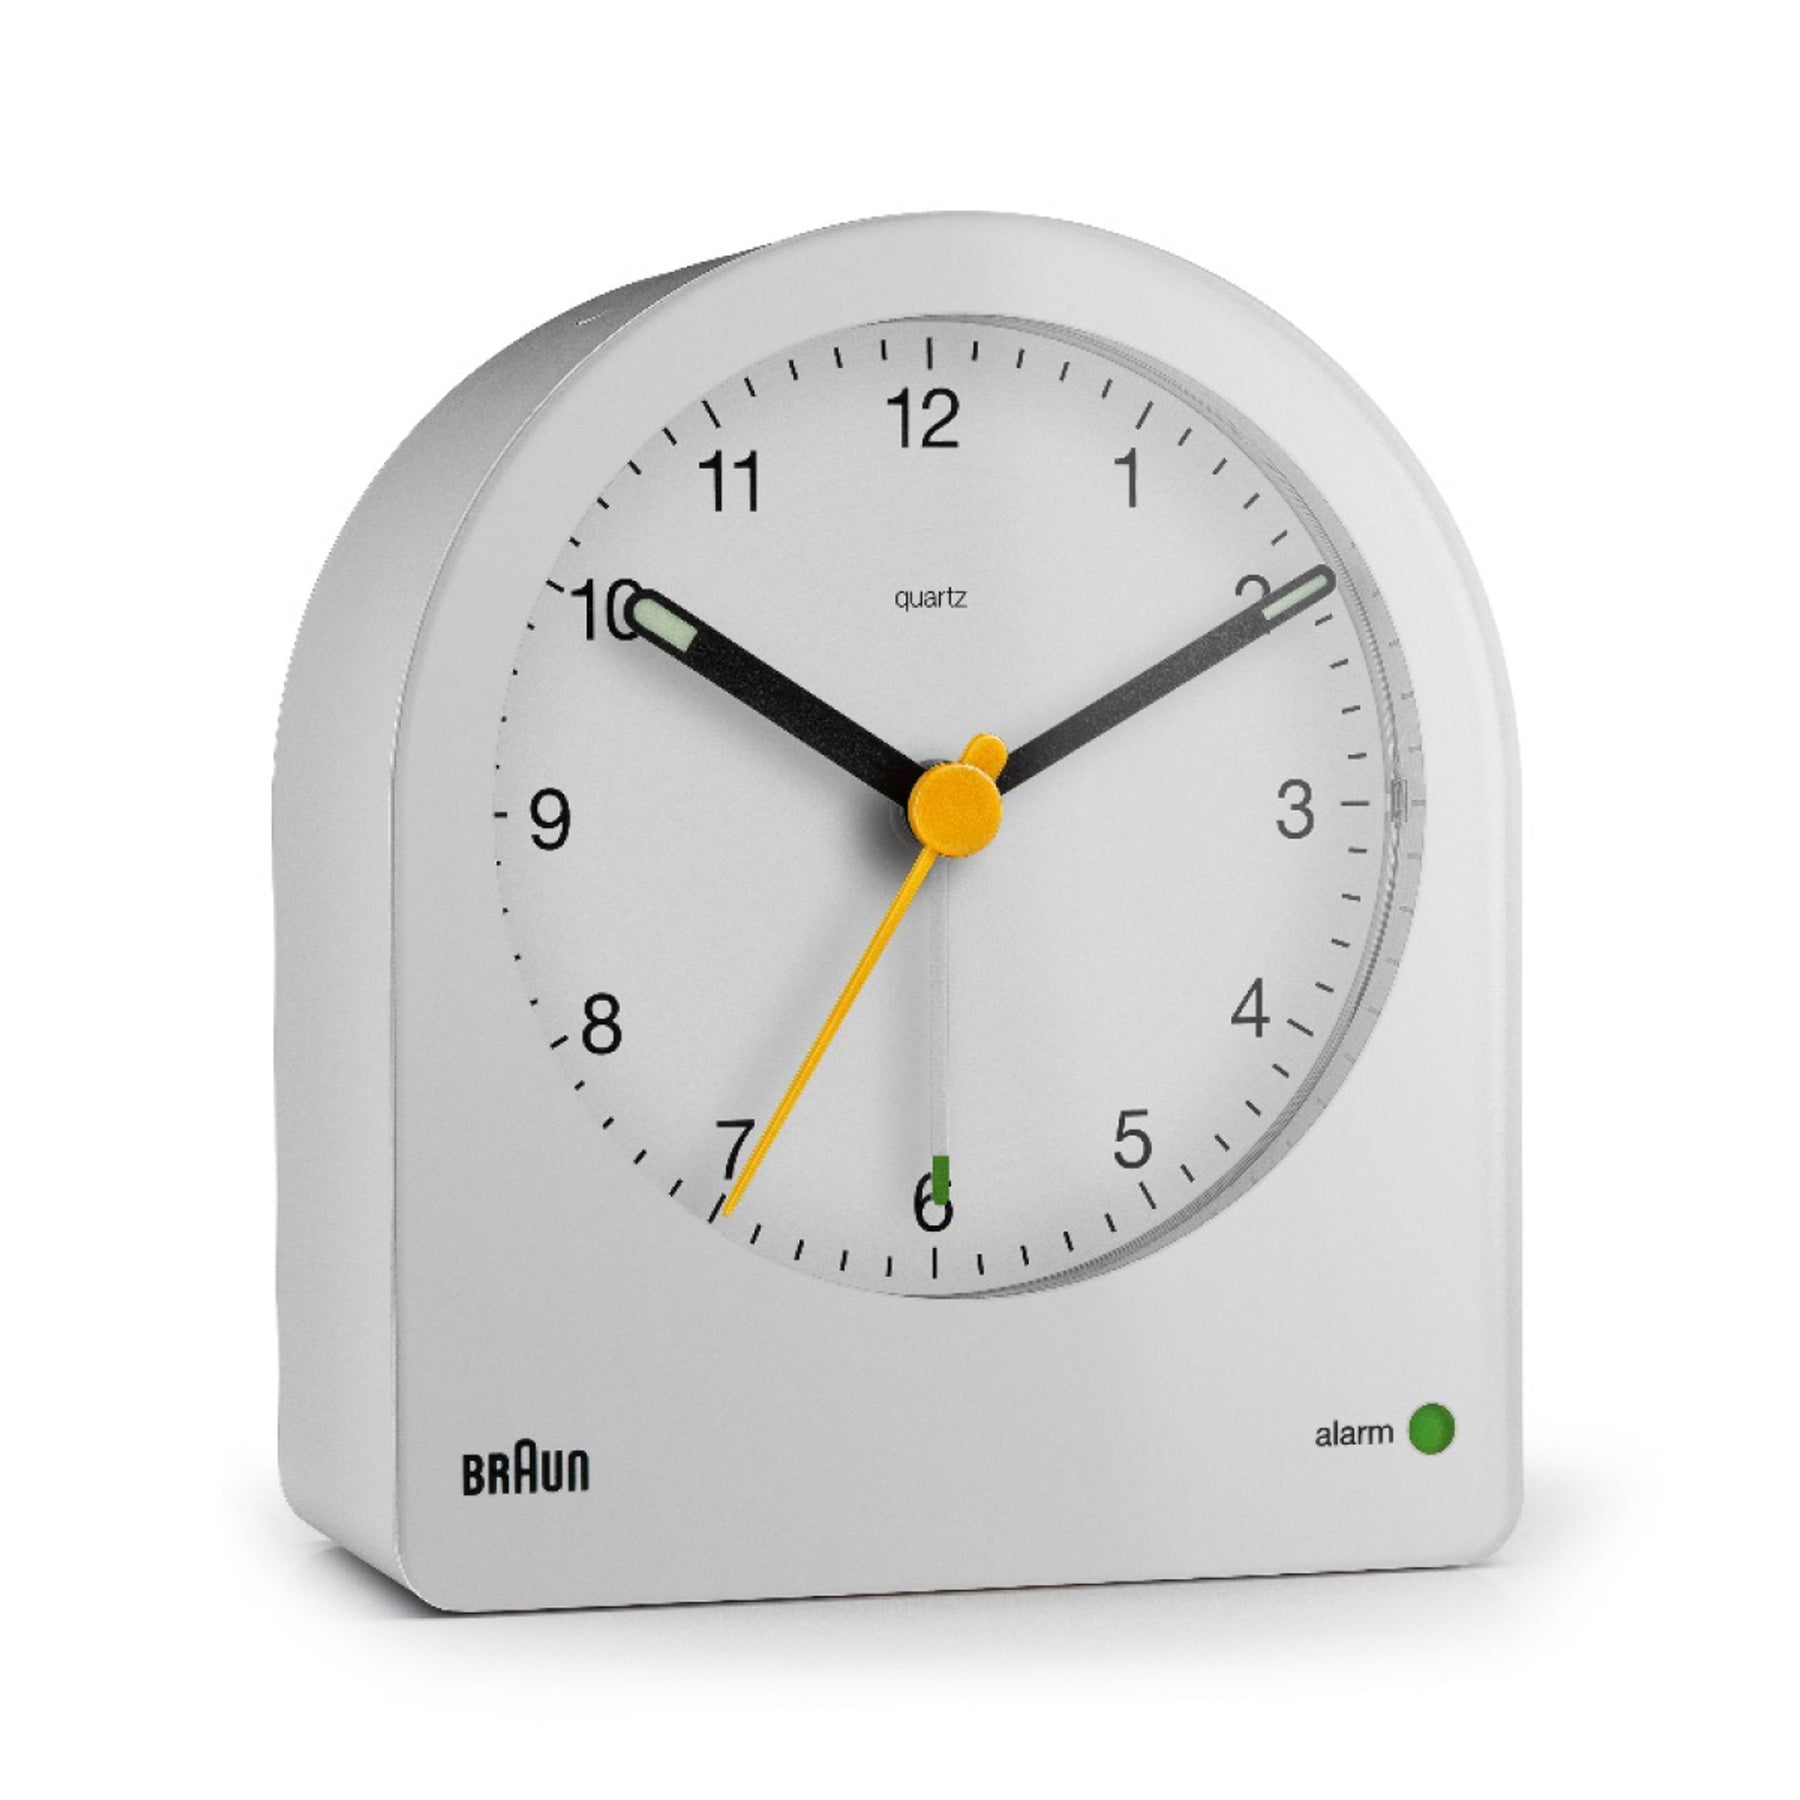 Braun, Alarm Clock BC22, White, Alarm Clock,